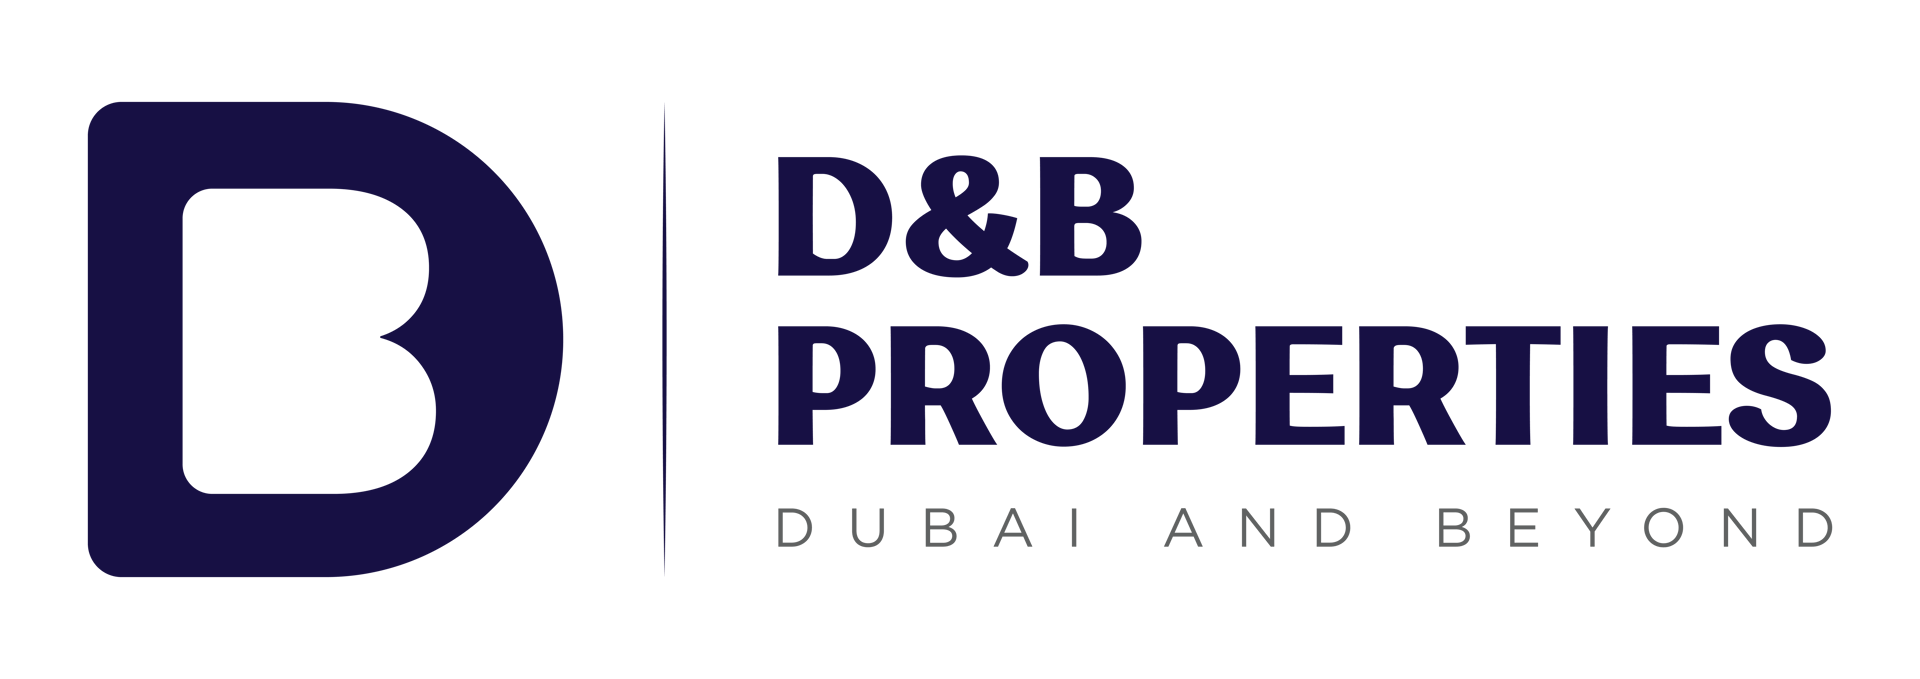 D&B PROPERTIES: LAUNCHING NEW BRAND IDENTITY CAMPAIGN